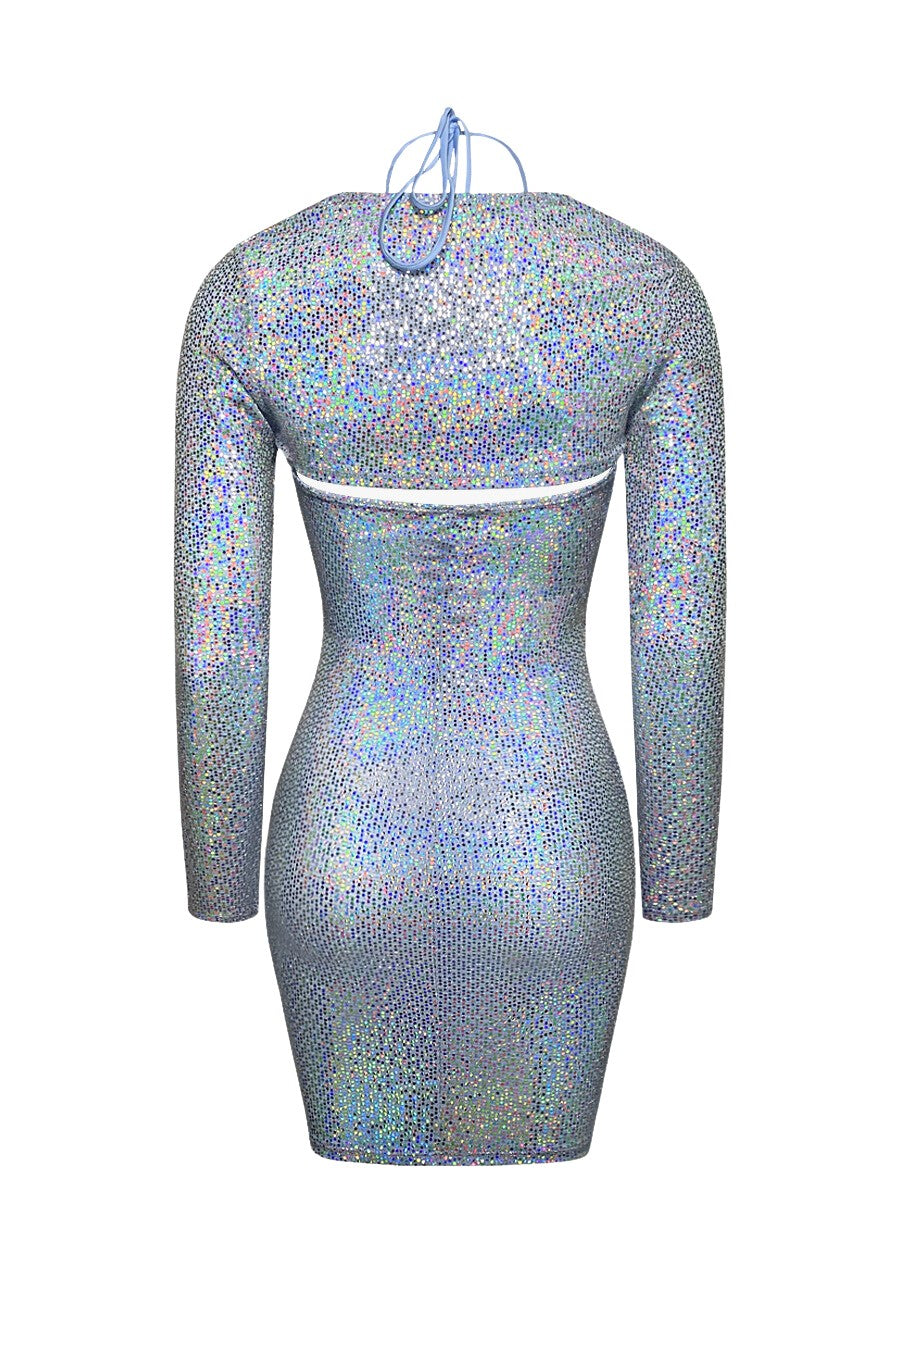 "ARM CANDY" Sky Blue Iridescent Sequins Two-Piece Short Dress